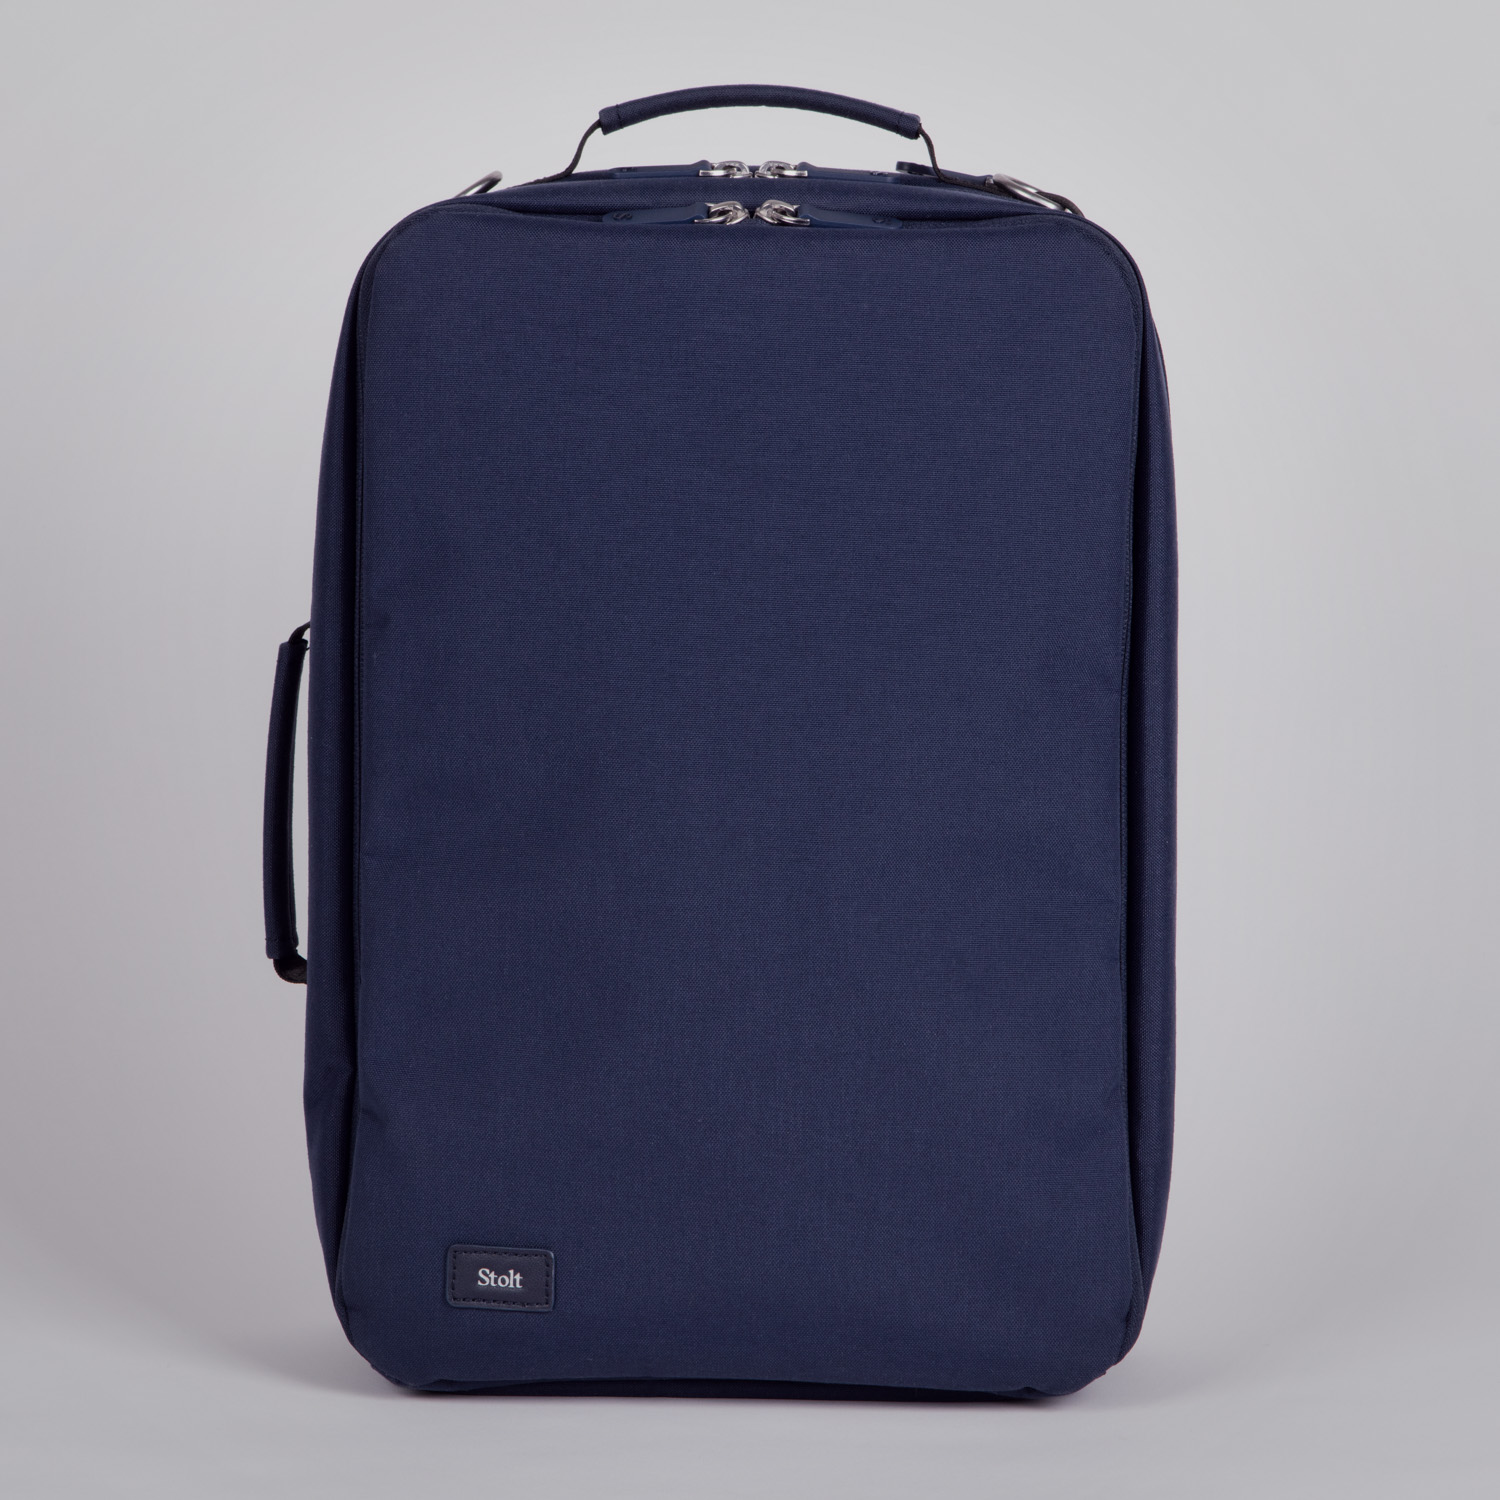 Blue commuter backpack from Stolt running